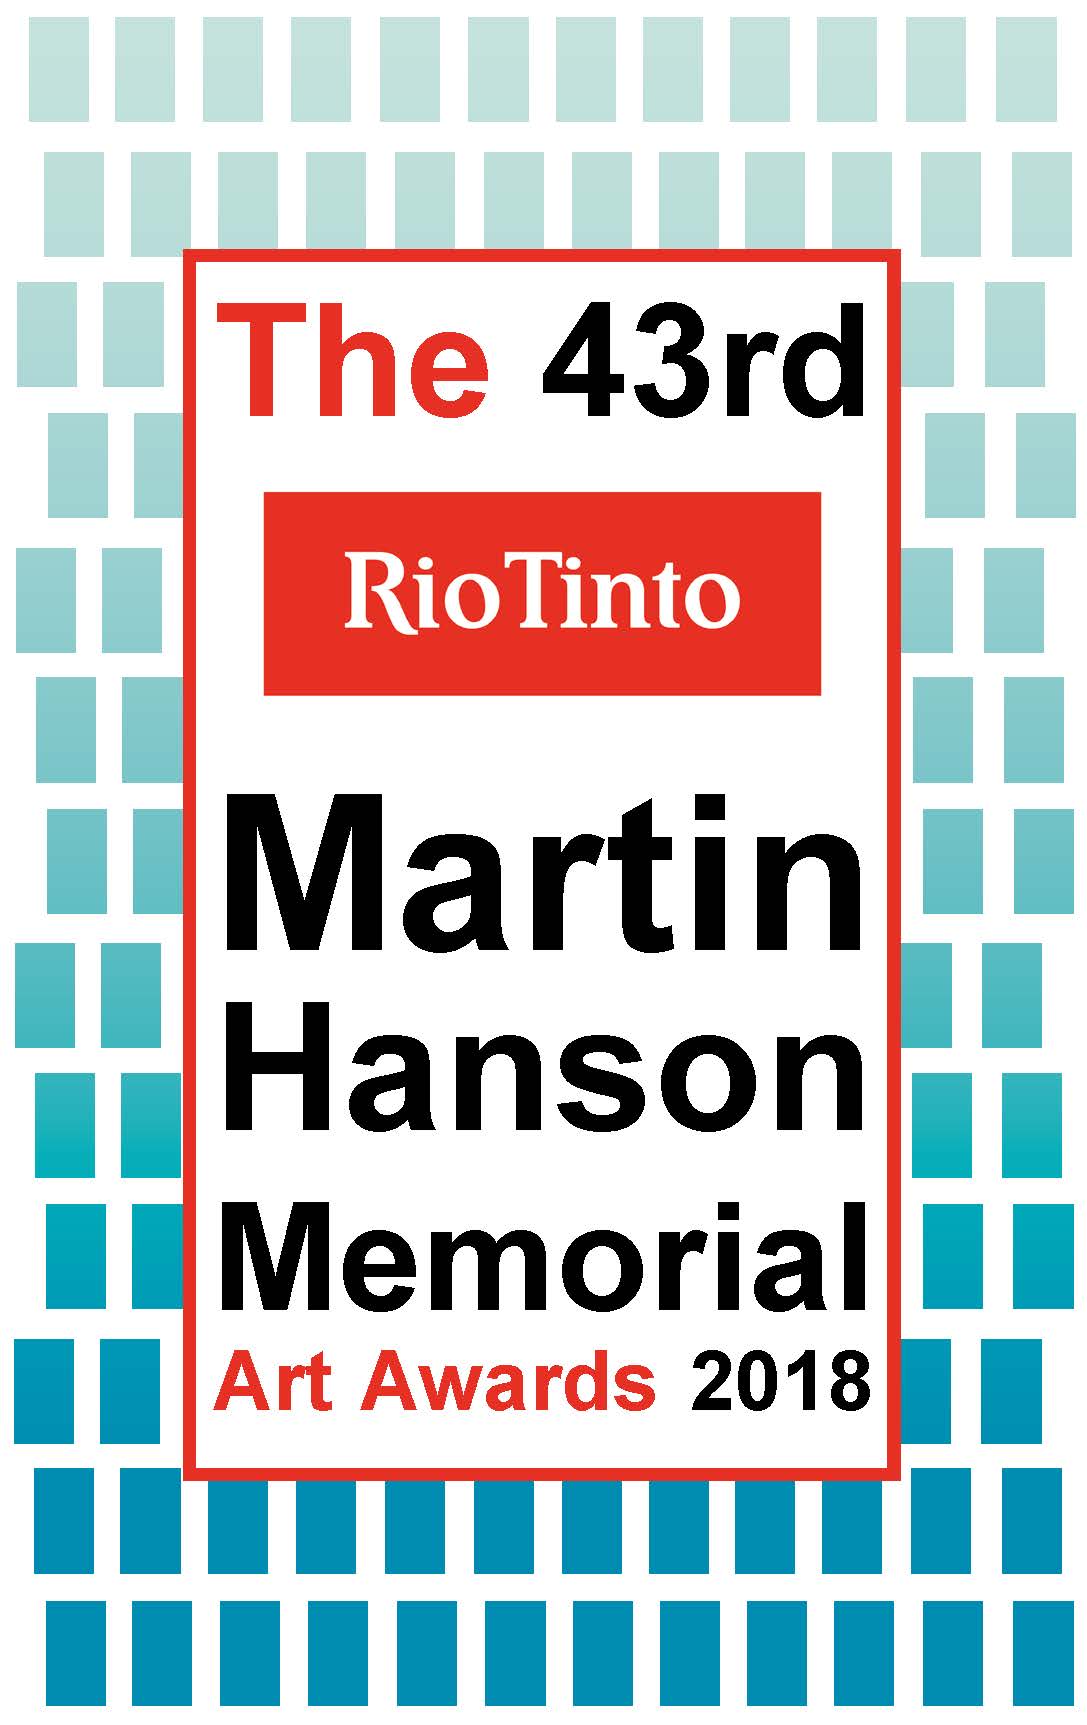 Martin Hanson Memorial Art Awards